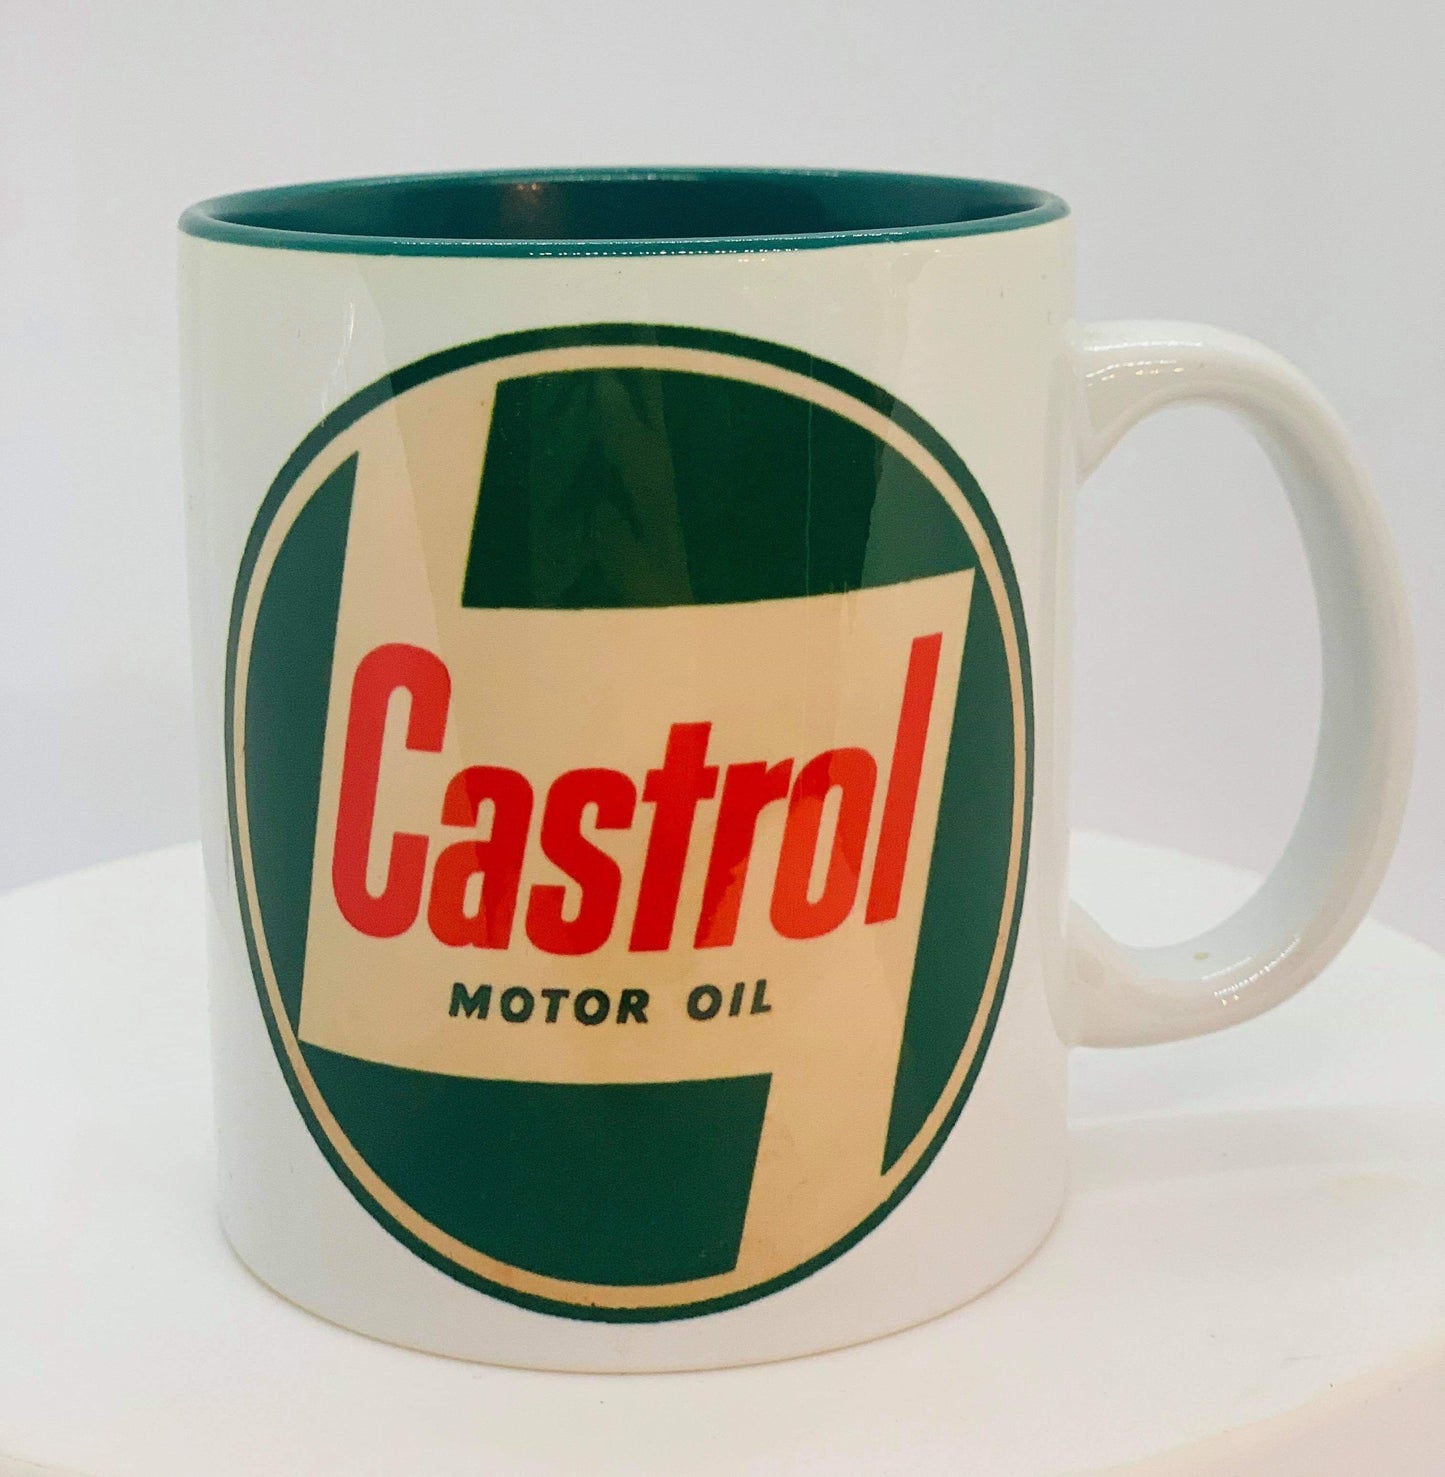 Castrol Oil Mug